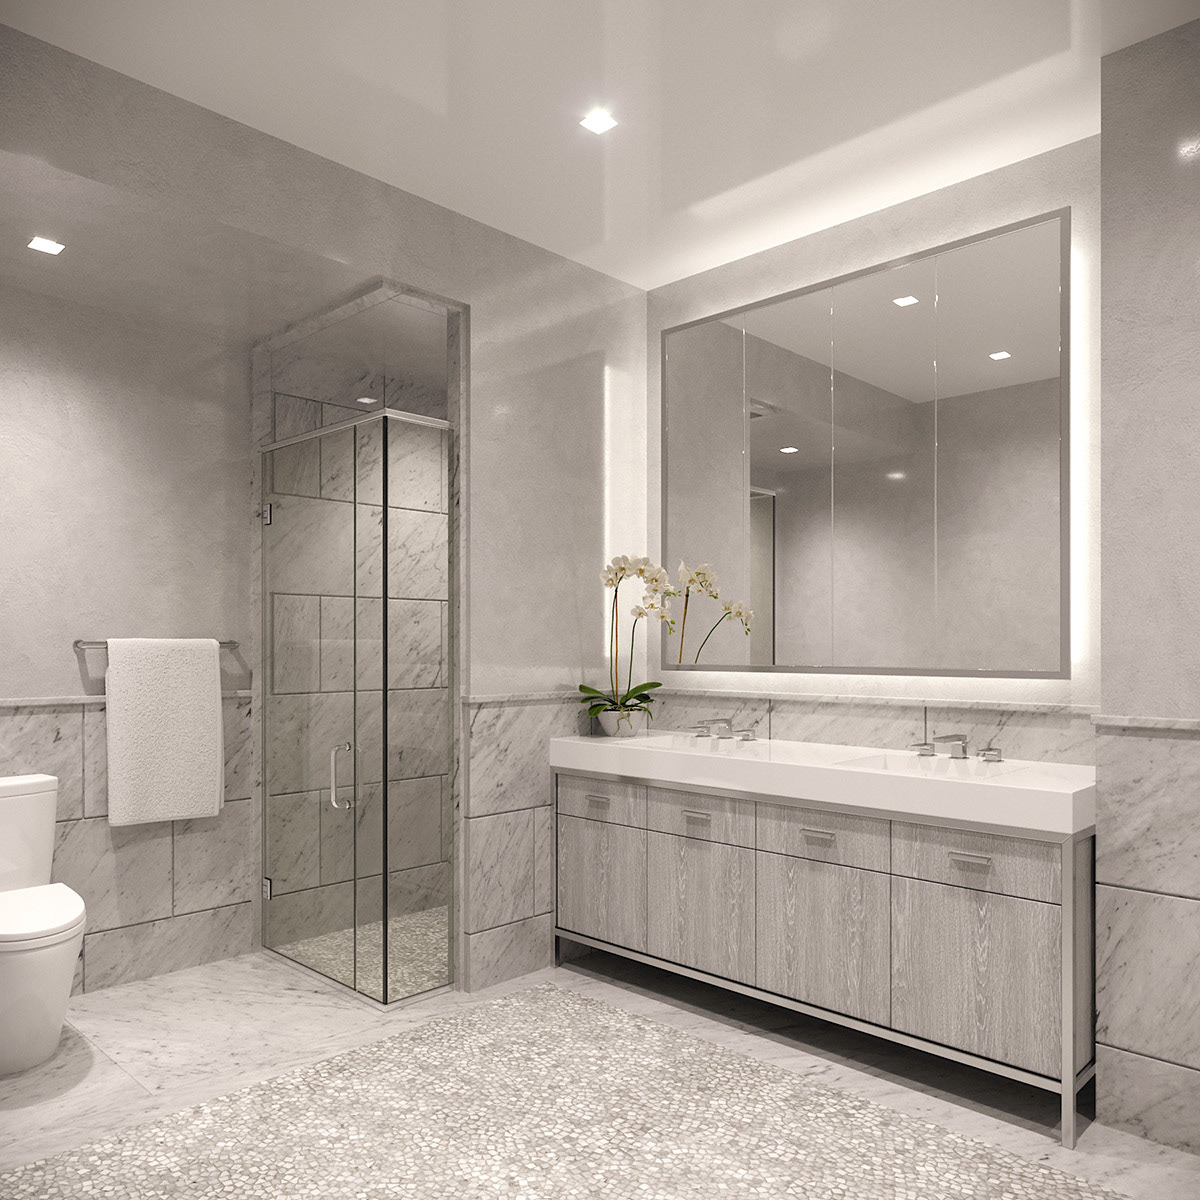 rendering CGI apartment interior luxury interior Manhattan New York visualization